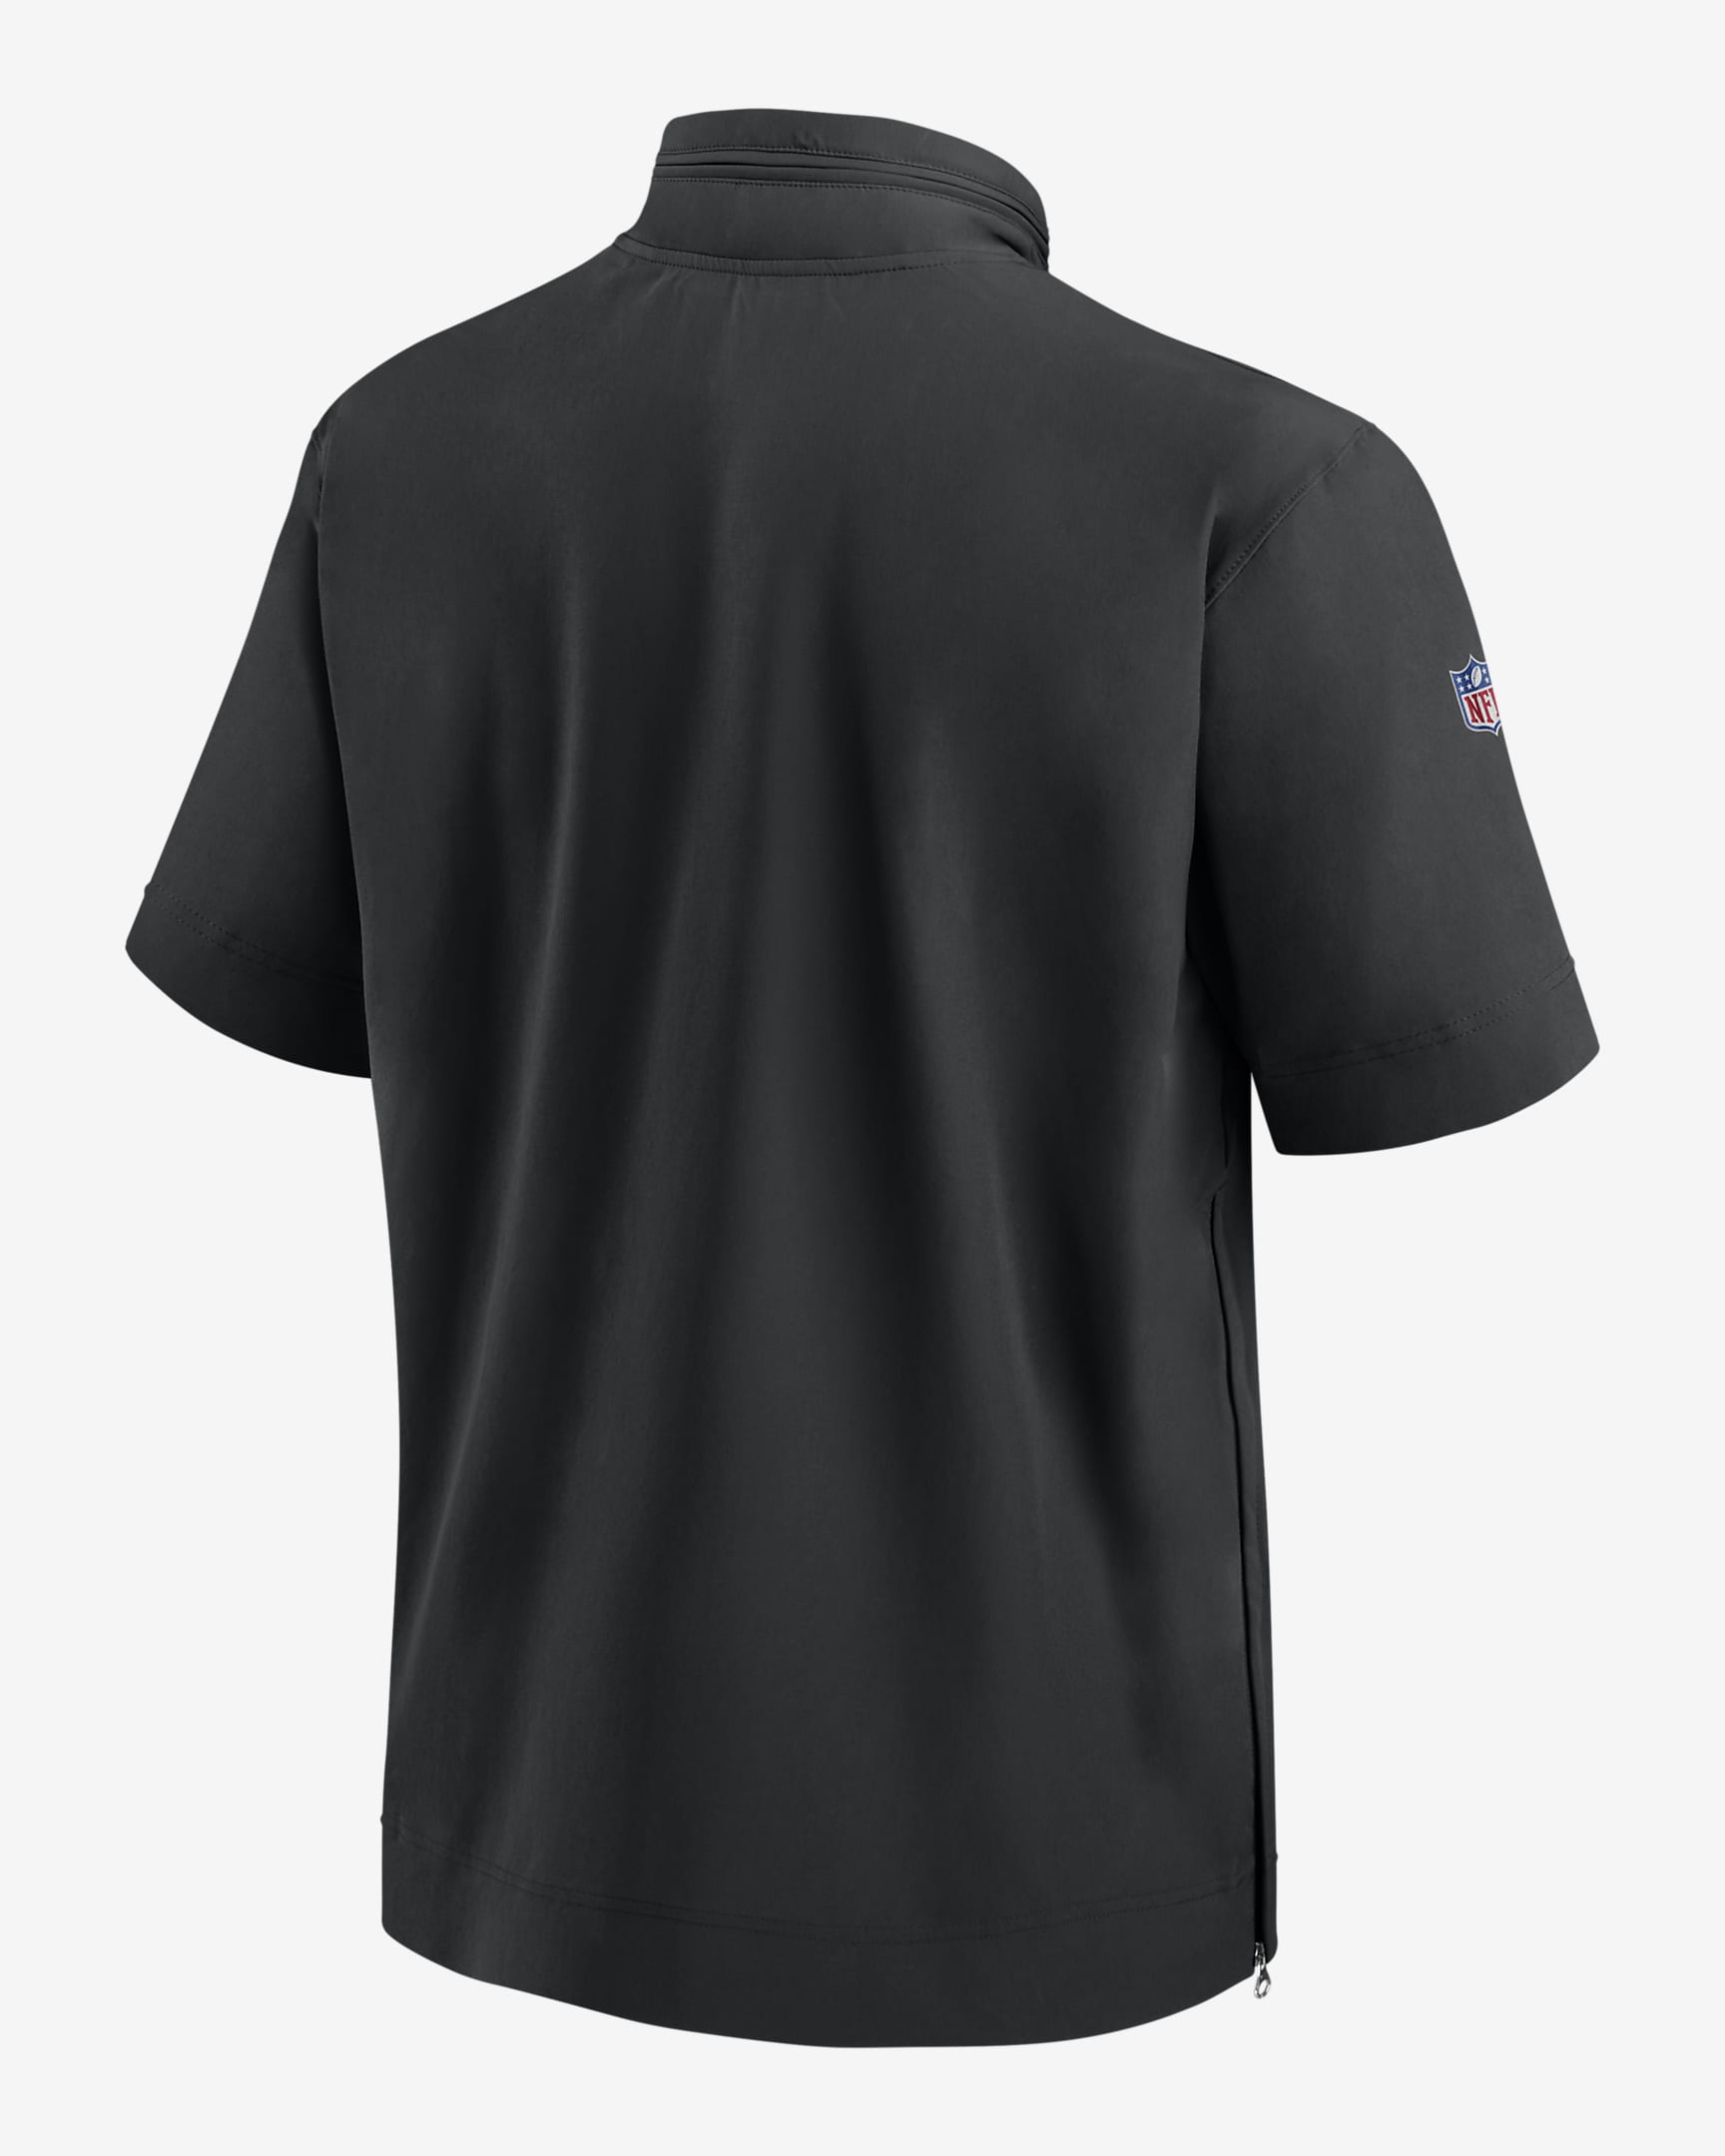 Nike Sideline Coach (NFL Las Vegas Raiders) Men's Short-Sleeve Jacket ...